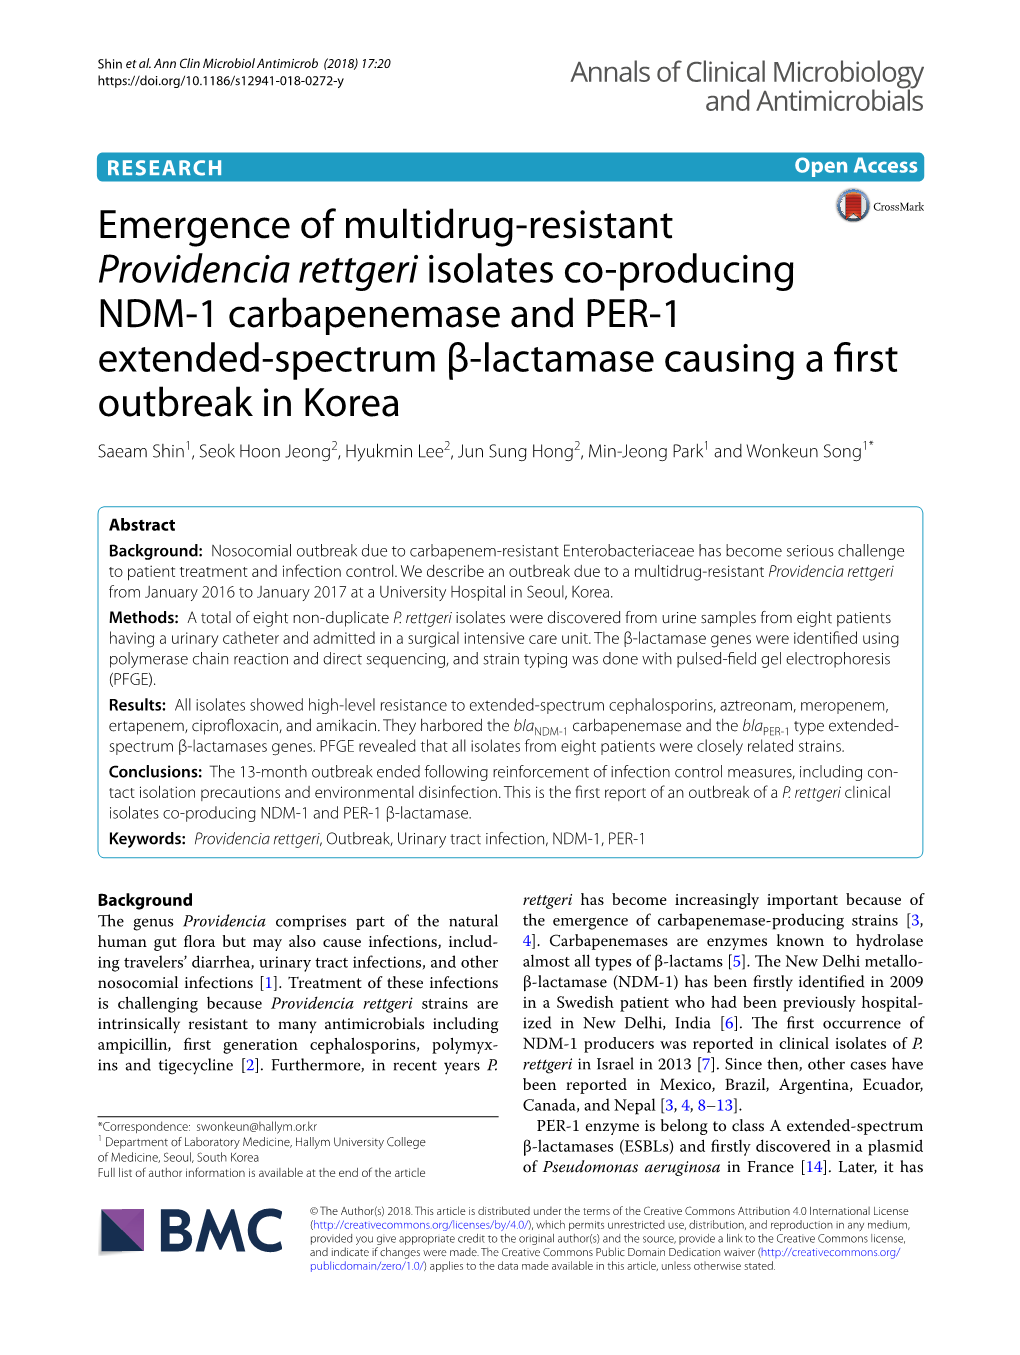 Emergence of Multidrug-Resistant Providencia Rettgeri Isolates Co